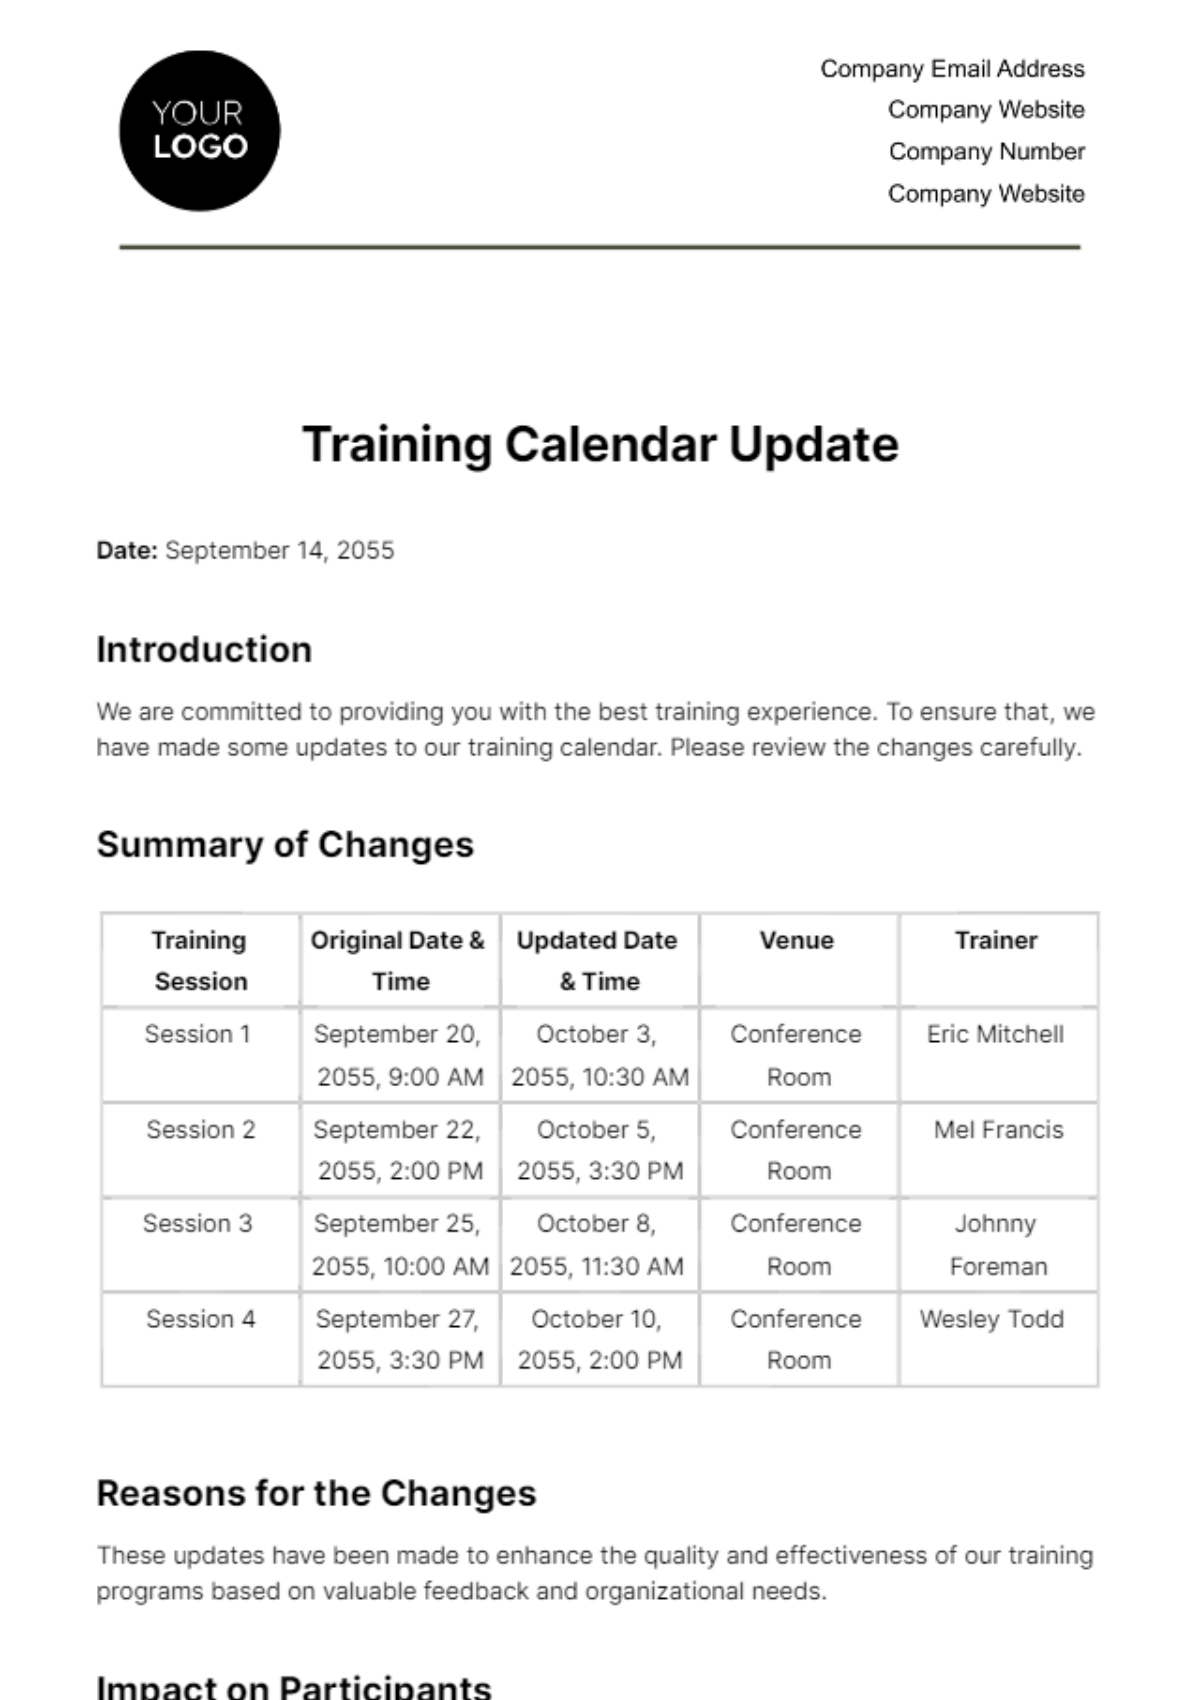 Free Training Calendar Update HR Template